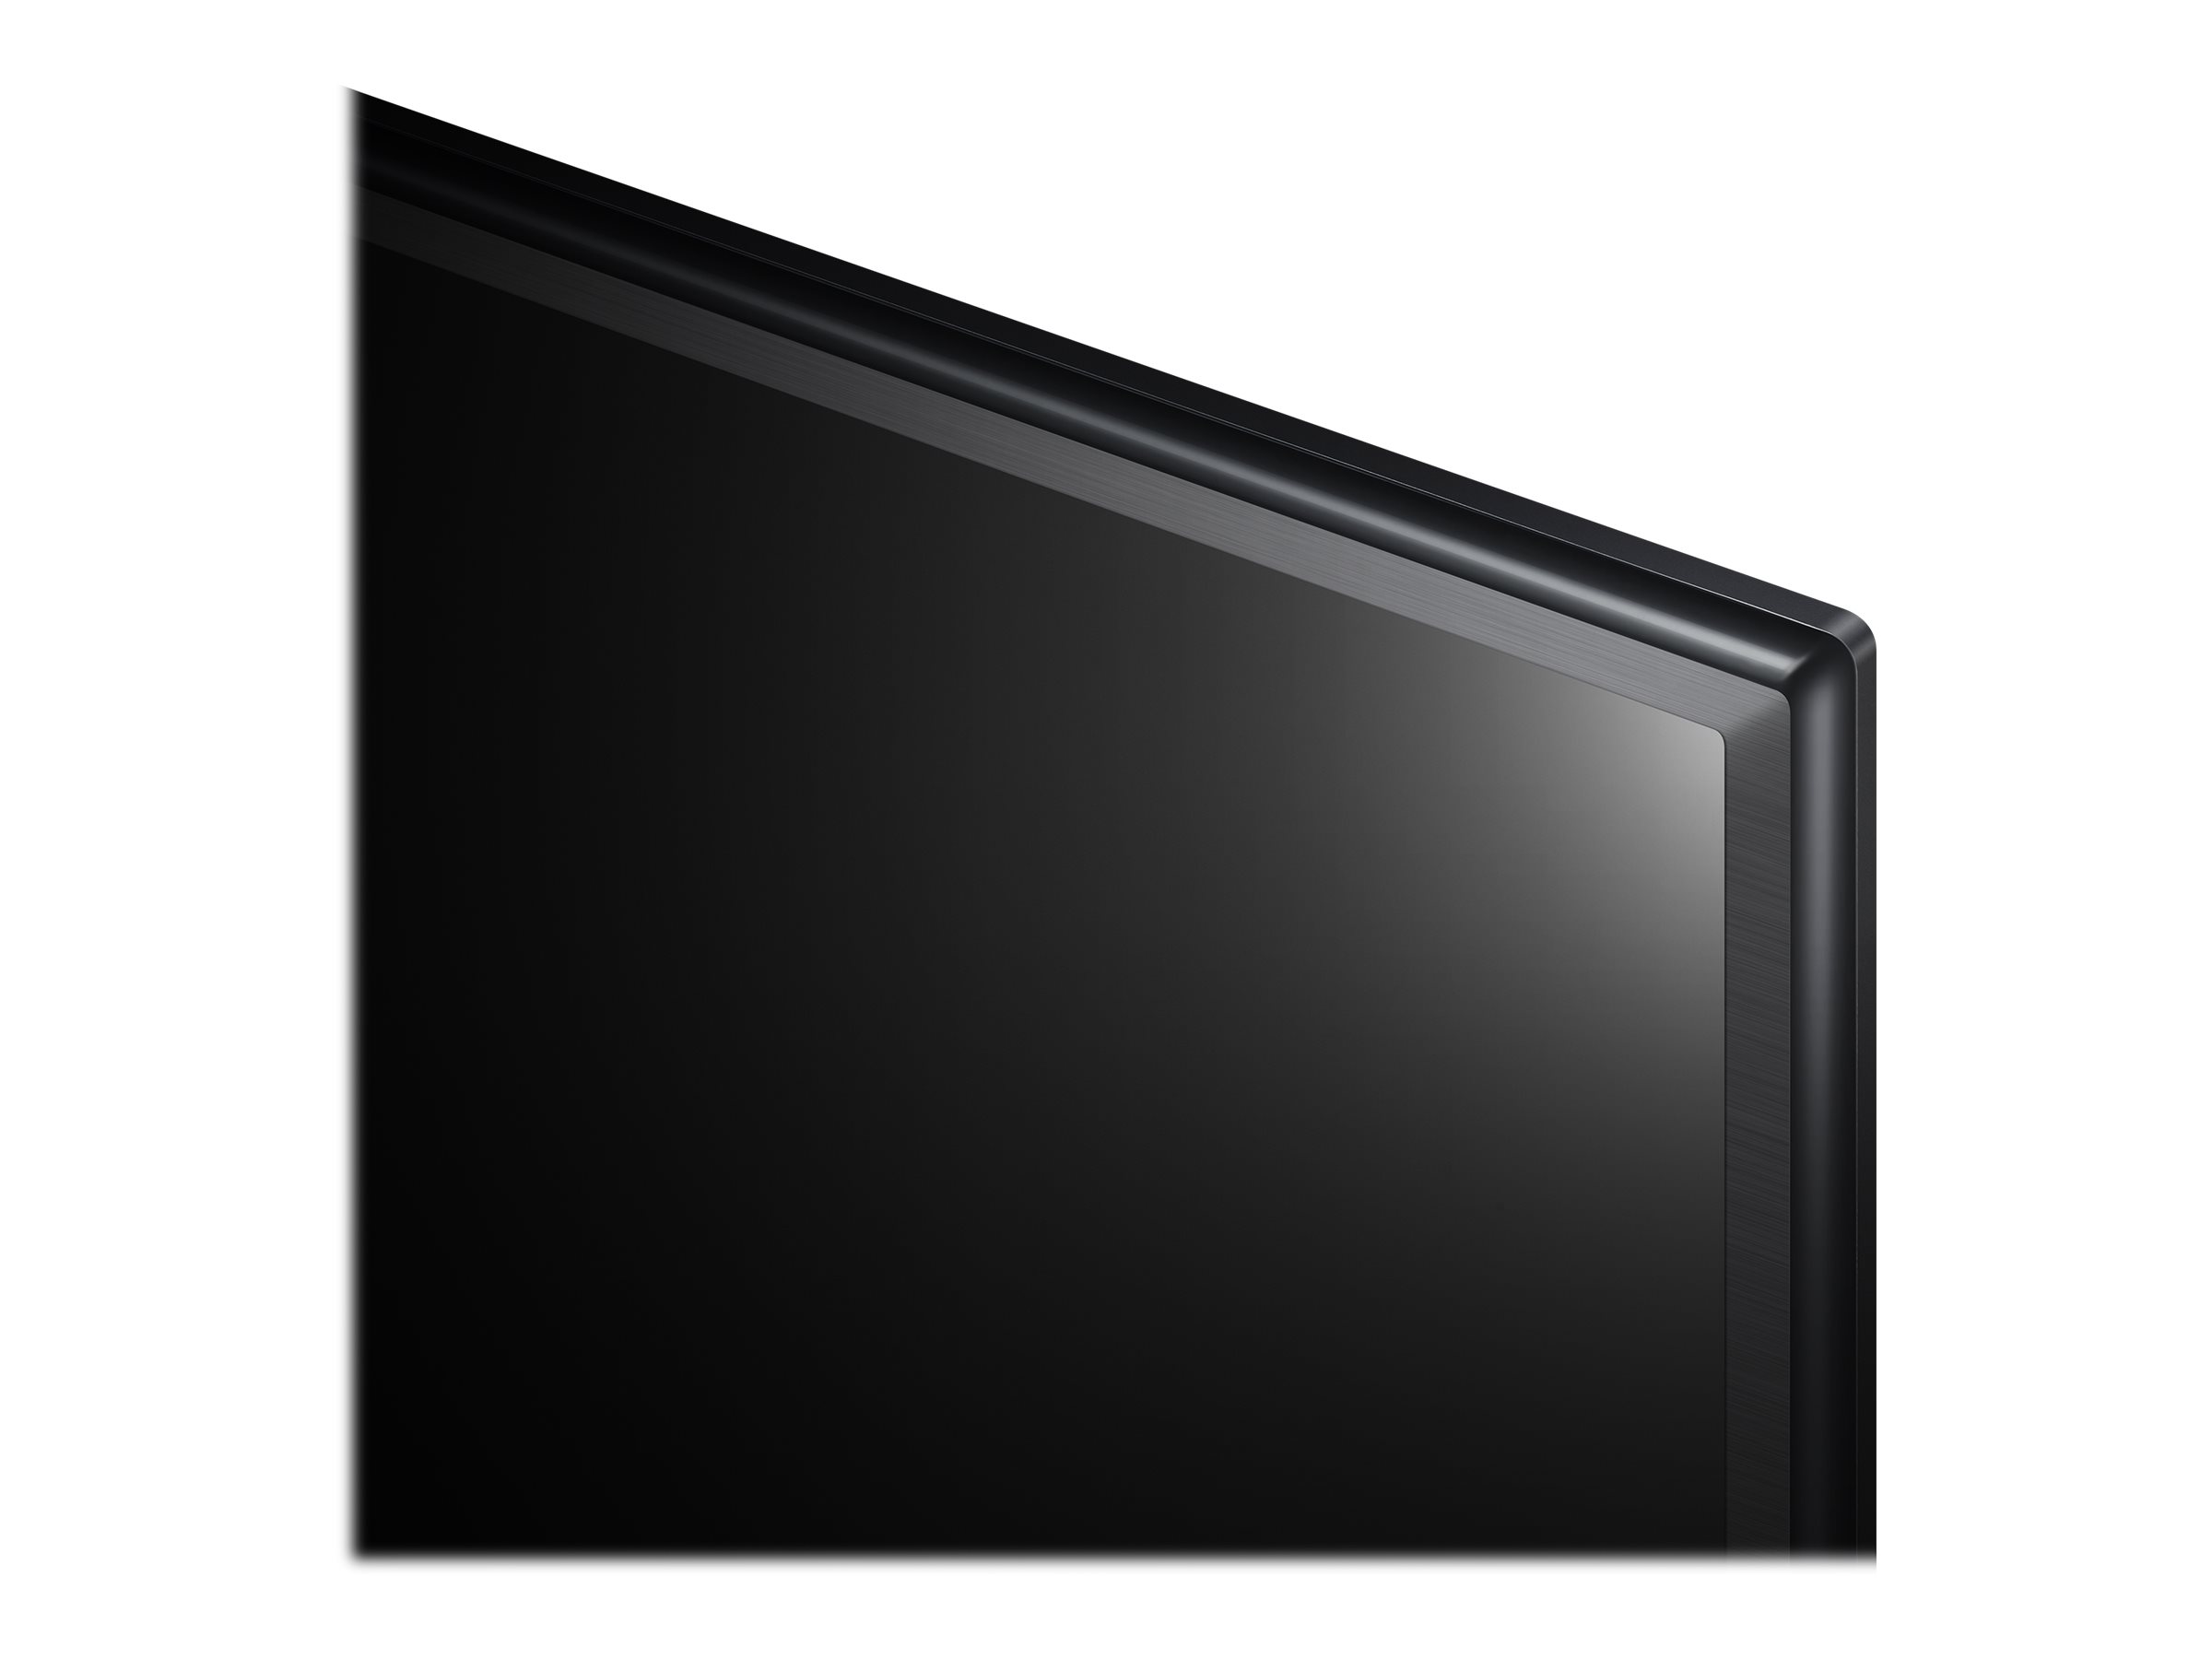 LG 55" Class 4K UHDTV (2160p) HDR Smart LED-LCD TV (55UM6910PUC) - image 5 of 7